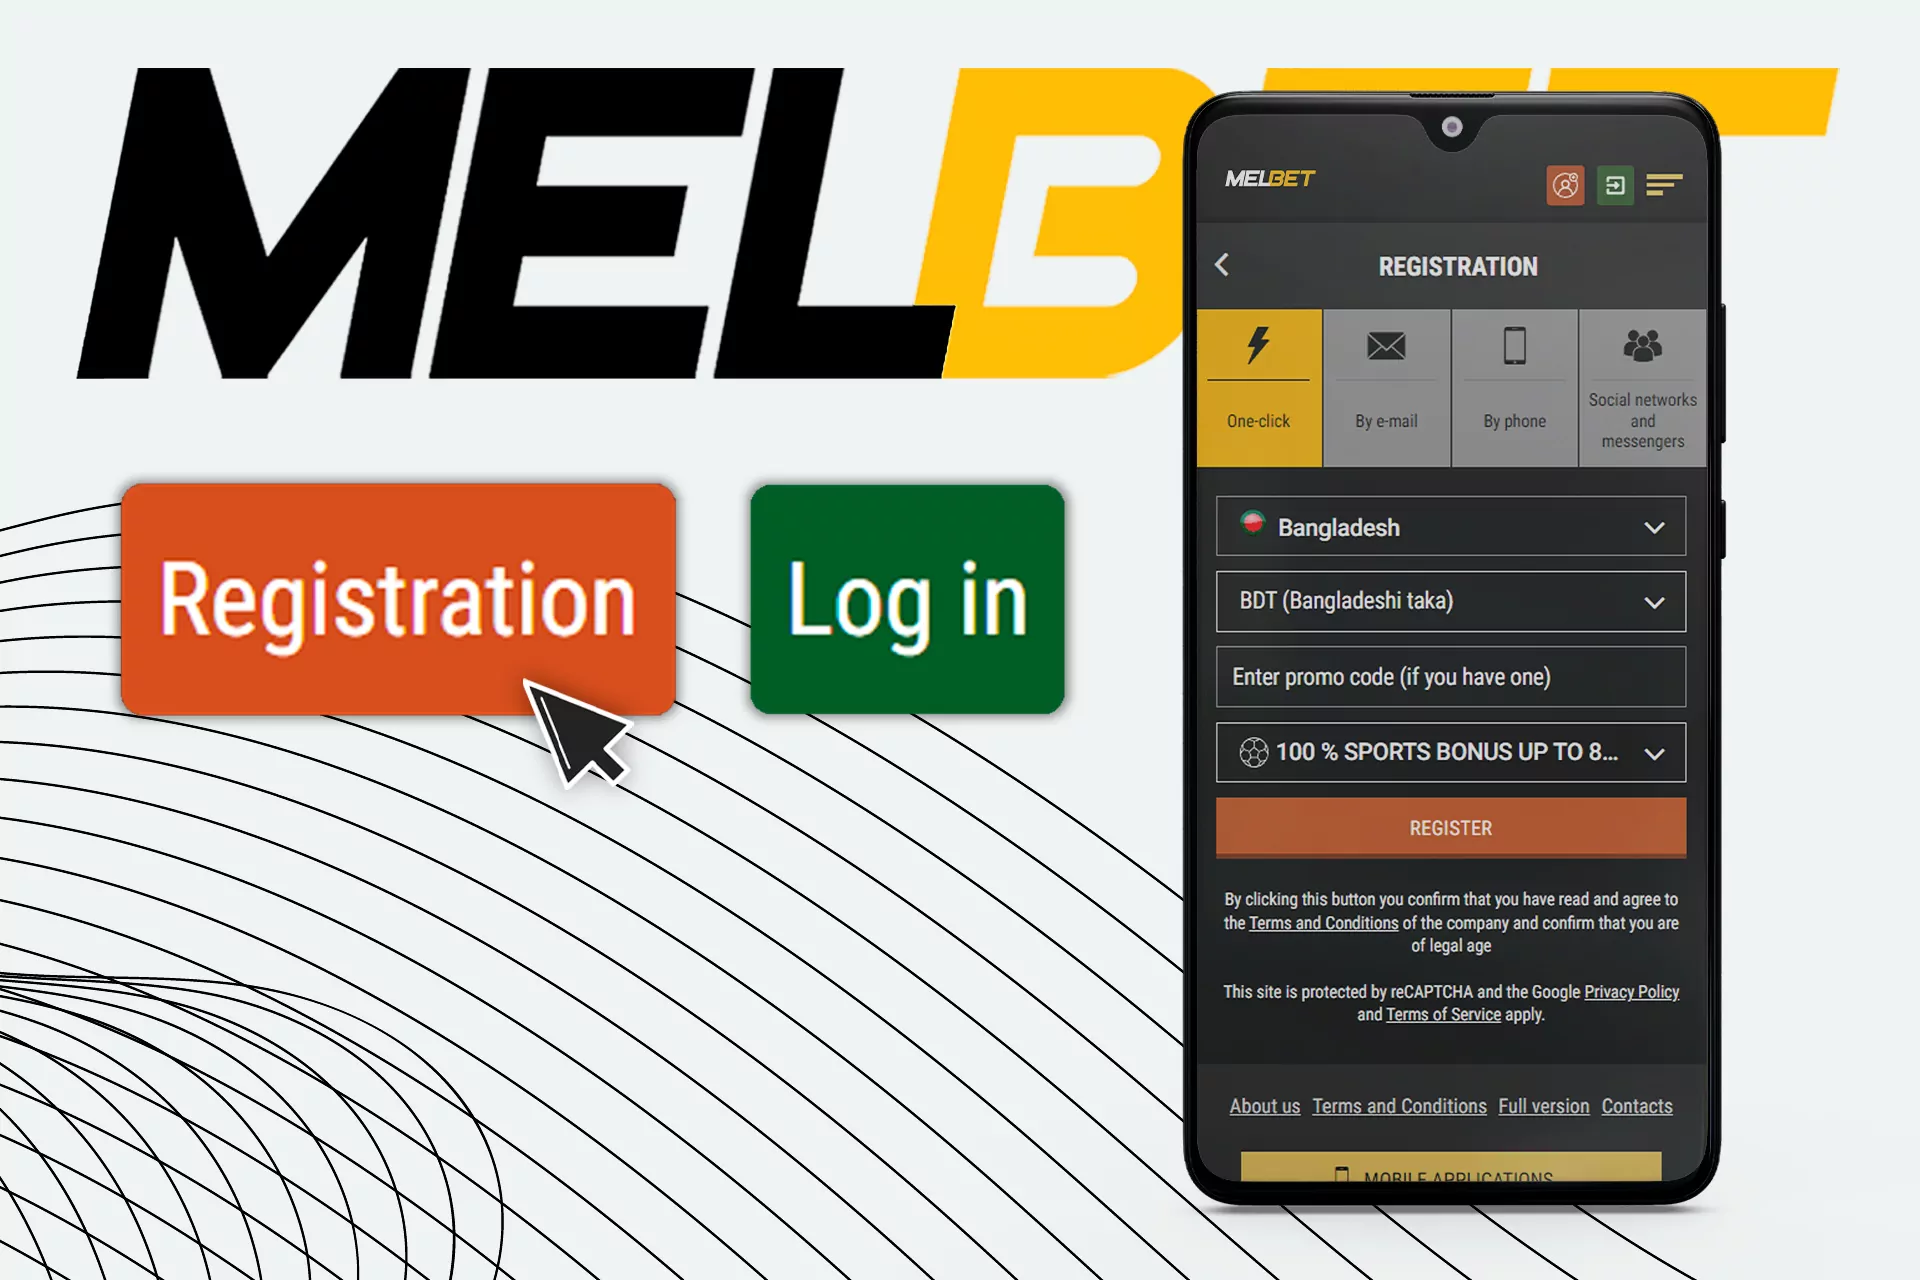 You can register an account via the Melbet app.